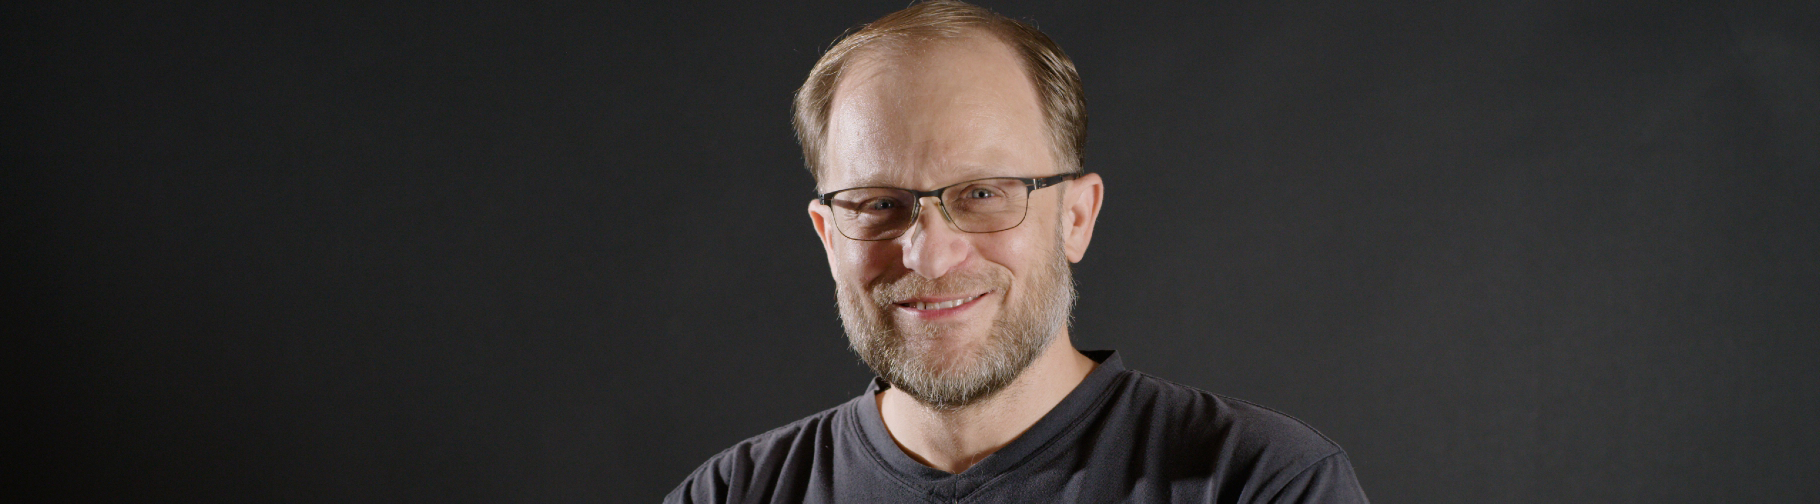 Production Director Tim Morten smiling photo